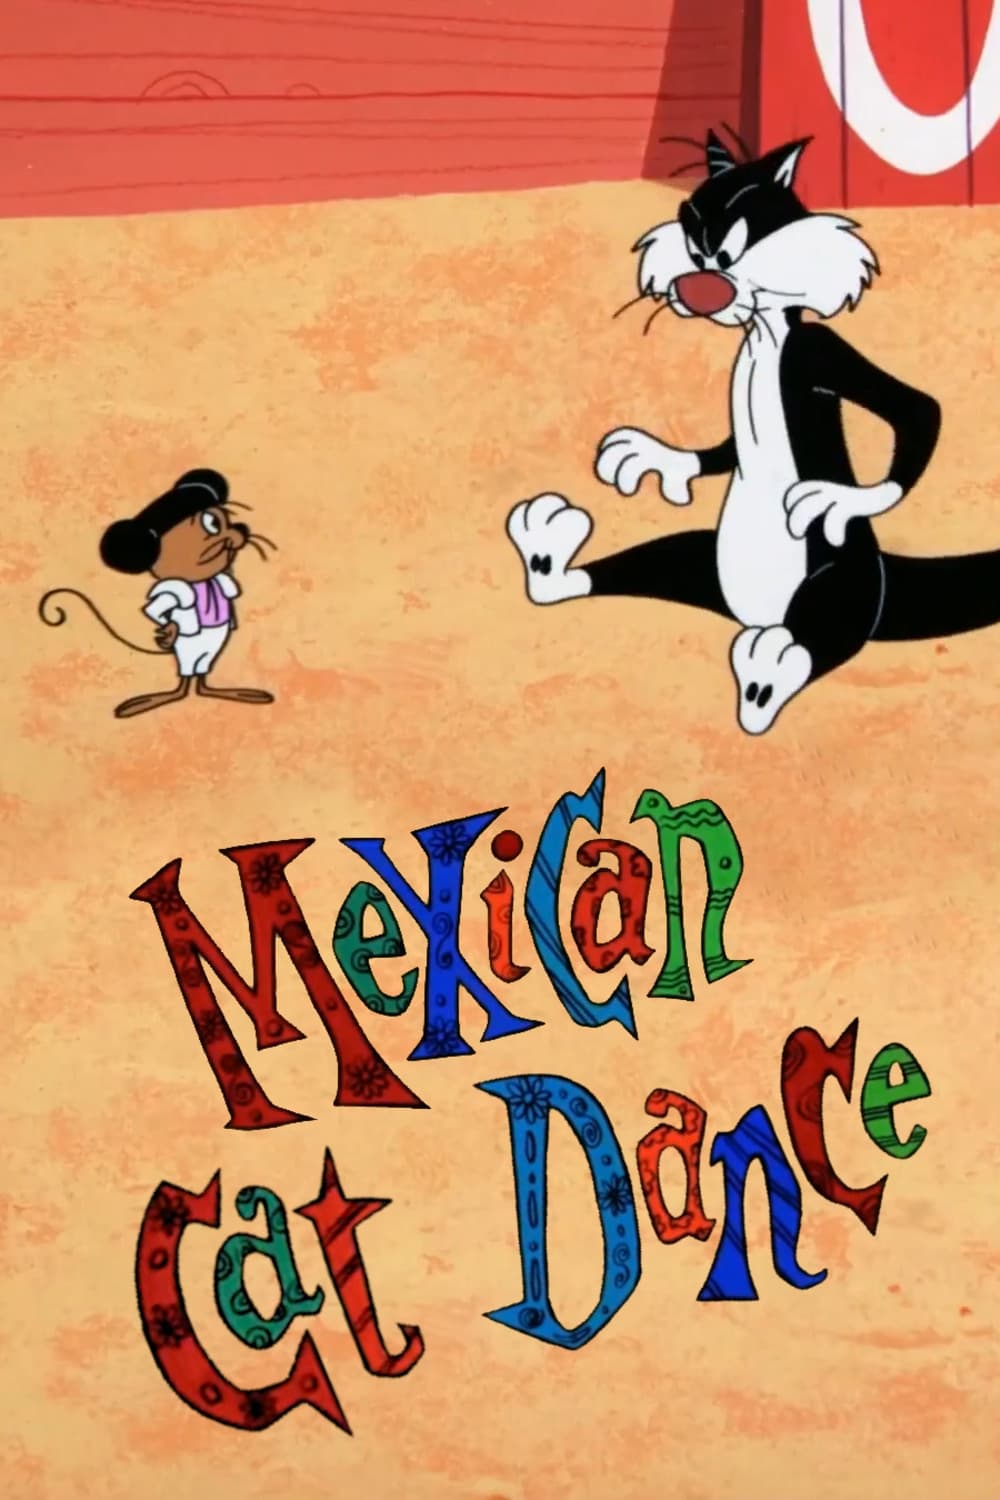 Mexican Cat Dance (1963)